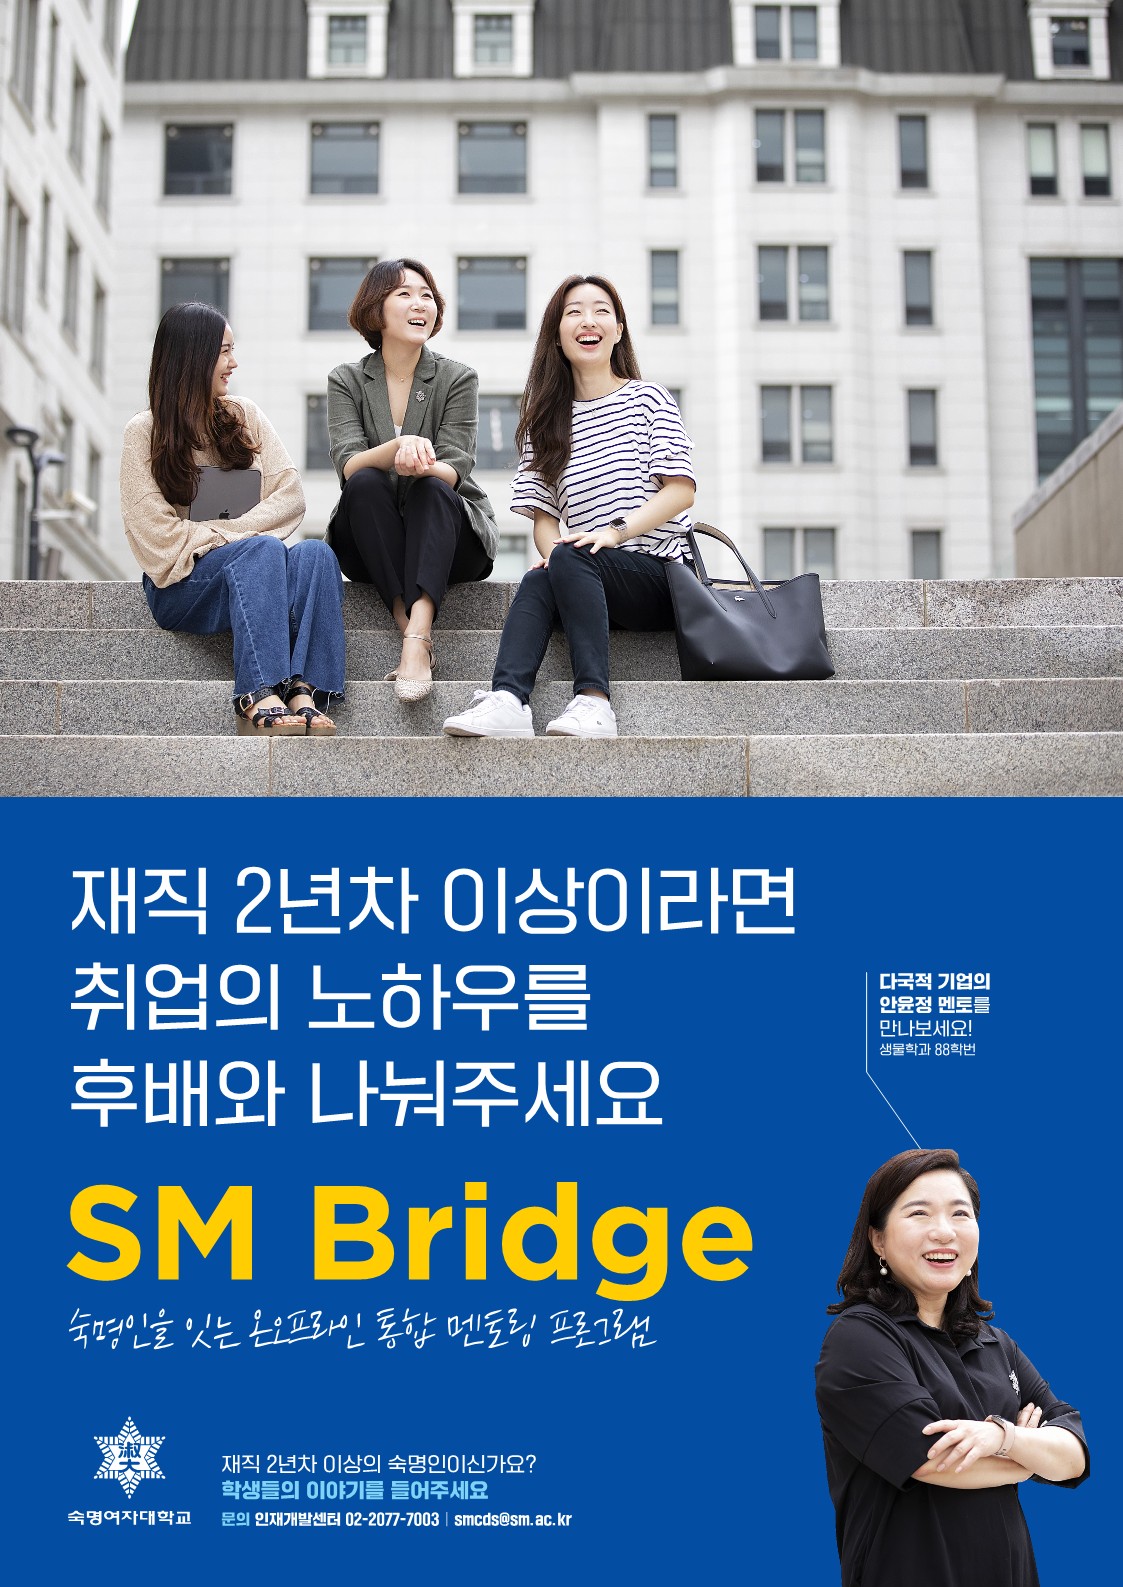 [SM-Bridge_멘토링] 재직 2년차 이상이라면 취업의 노하우를 후배와 나눠주세요. 숙명인을 잇는 온오프라인 통합 멘토링 프로그램